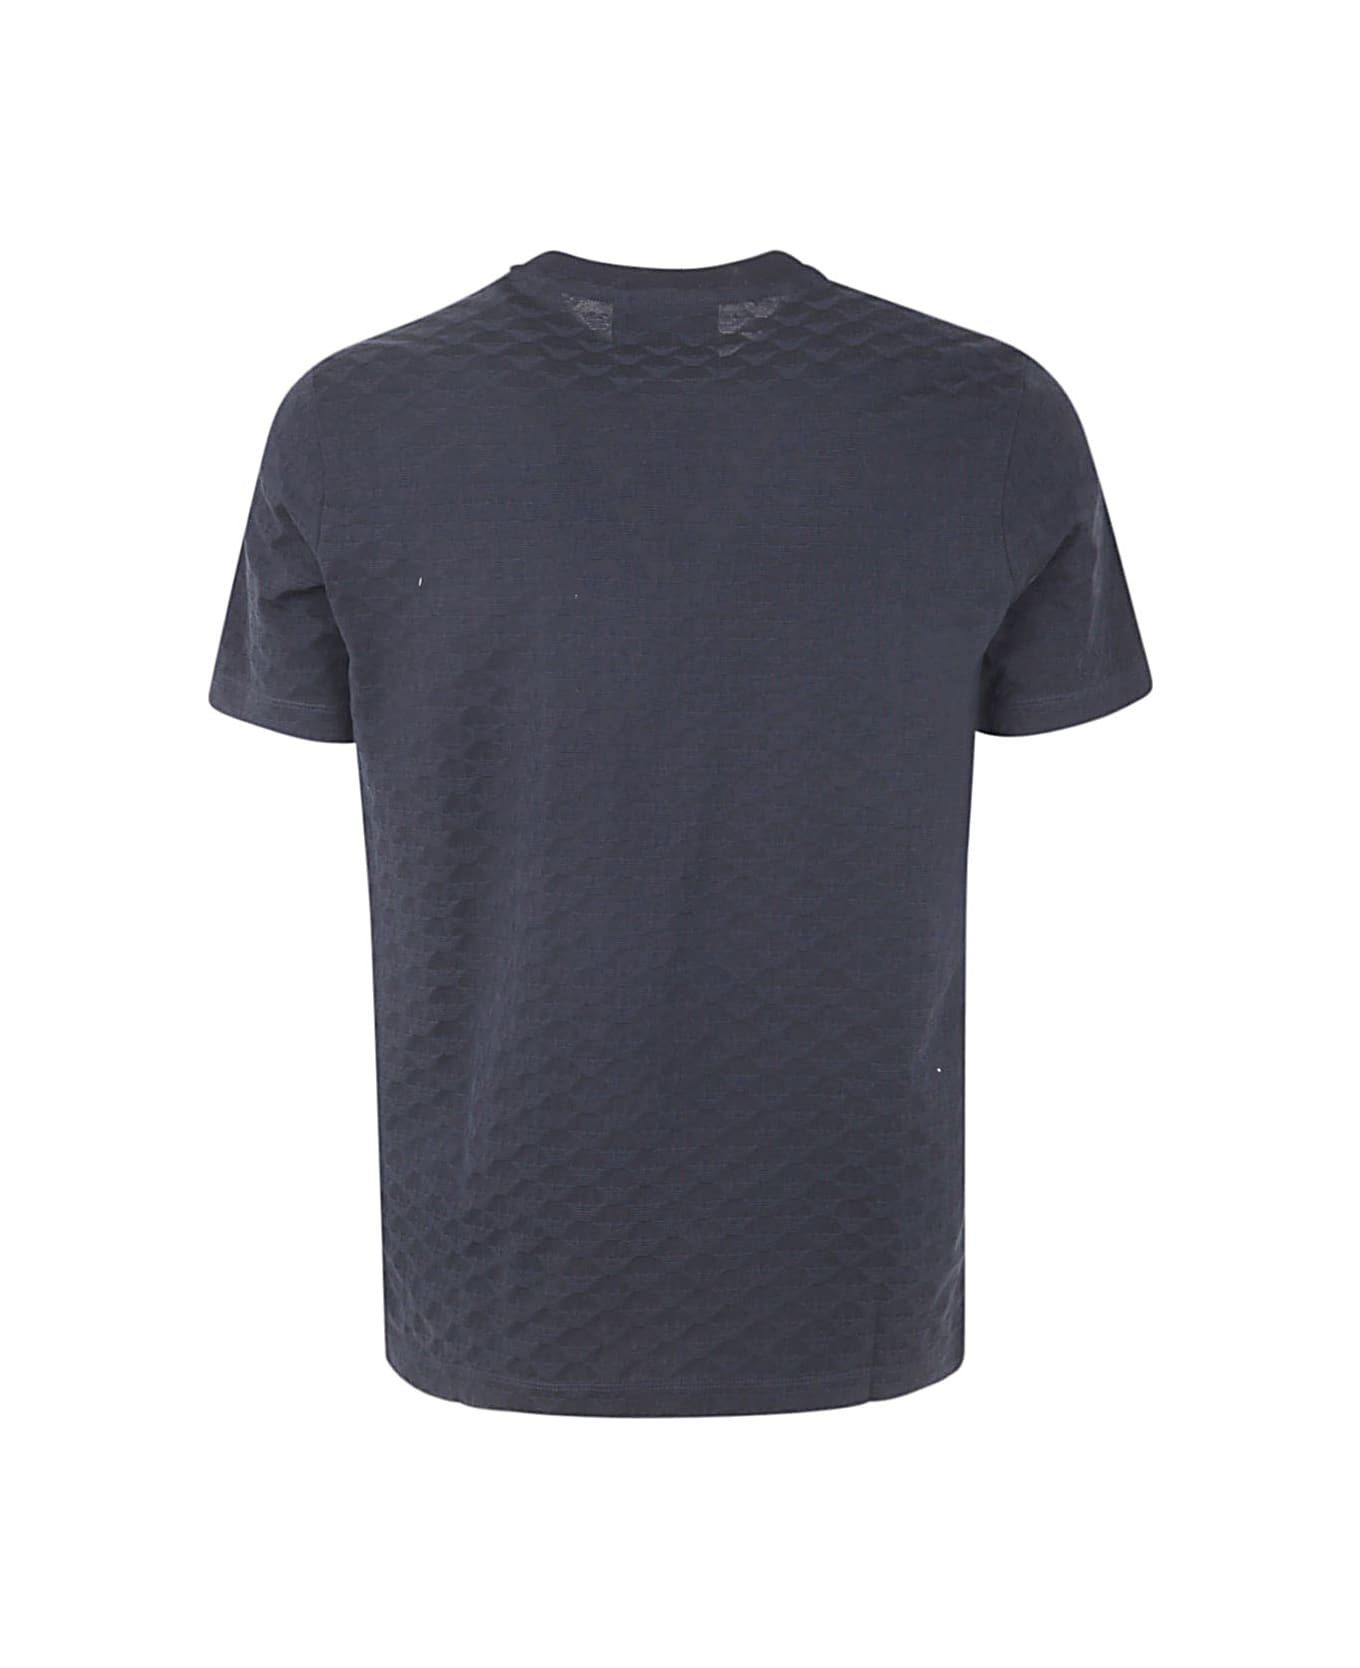 Emporio Armani Crew Neck Short Sleeves T-shirt - Navy Blue